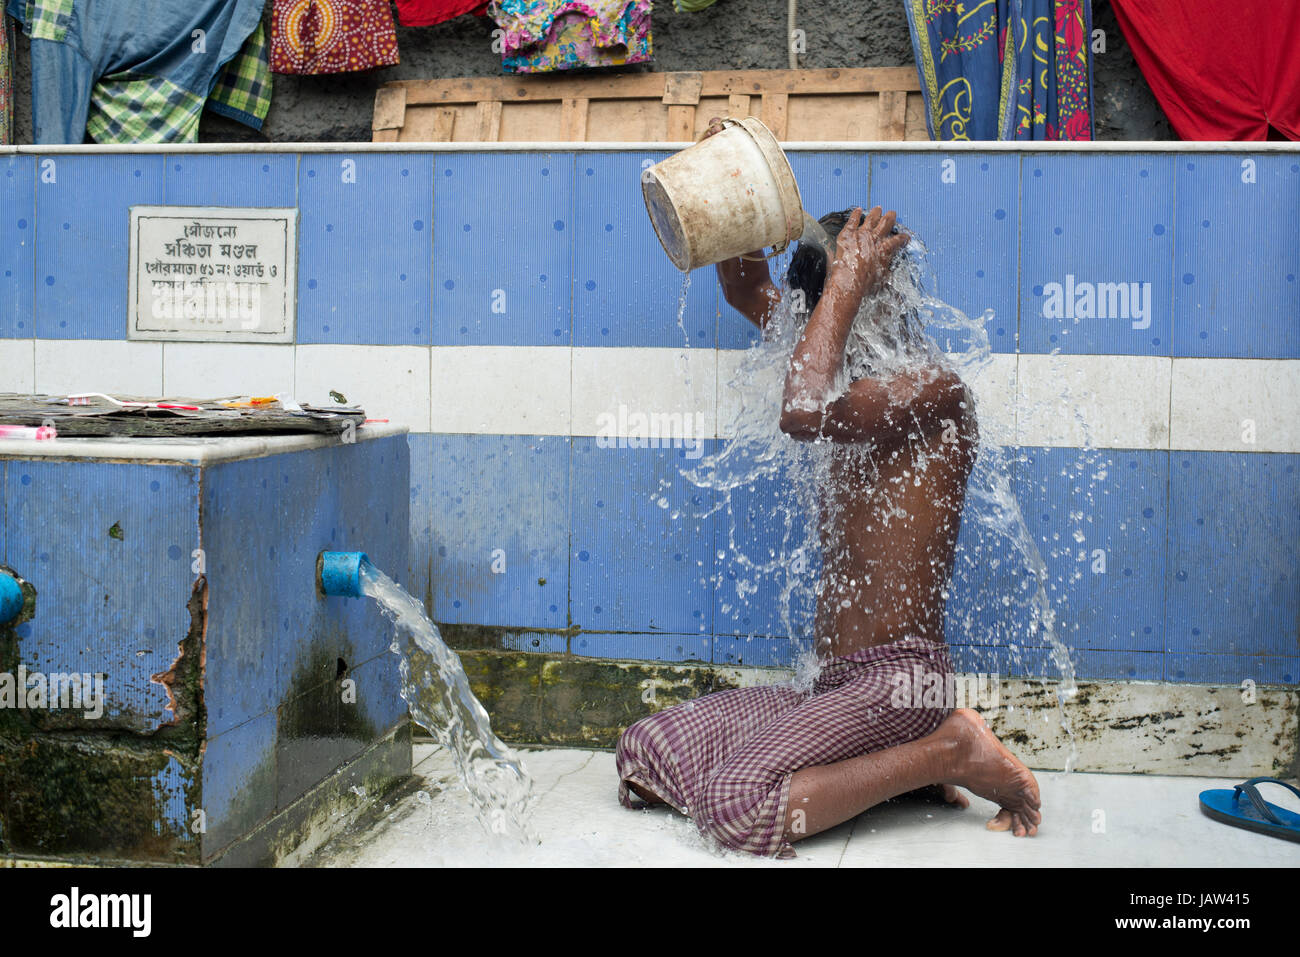 A man bathes himself at a roadside bathing place in Kolkata (Calcutta), West Bengal, India Stock Photo